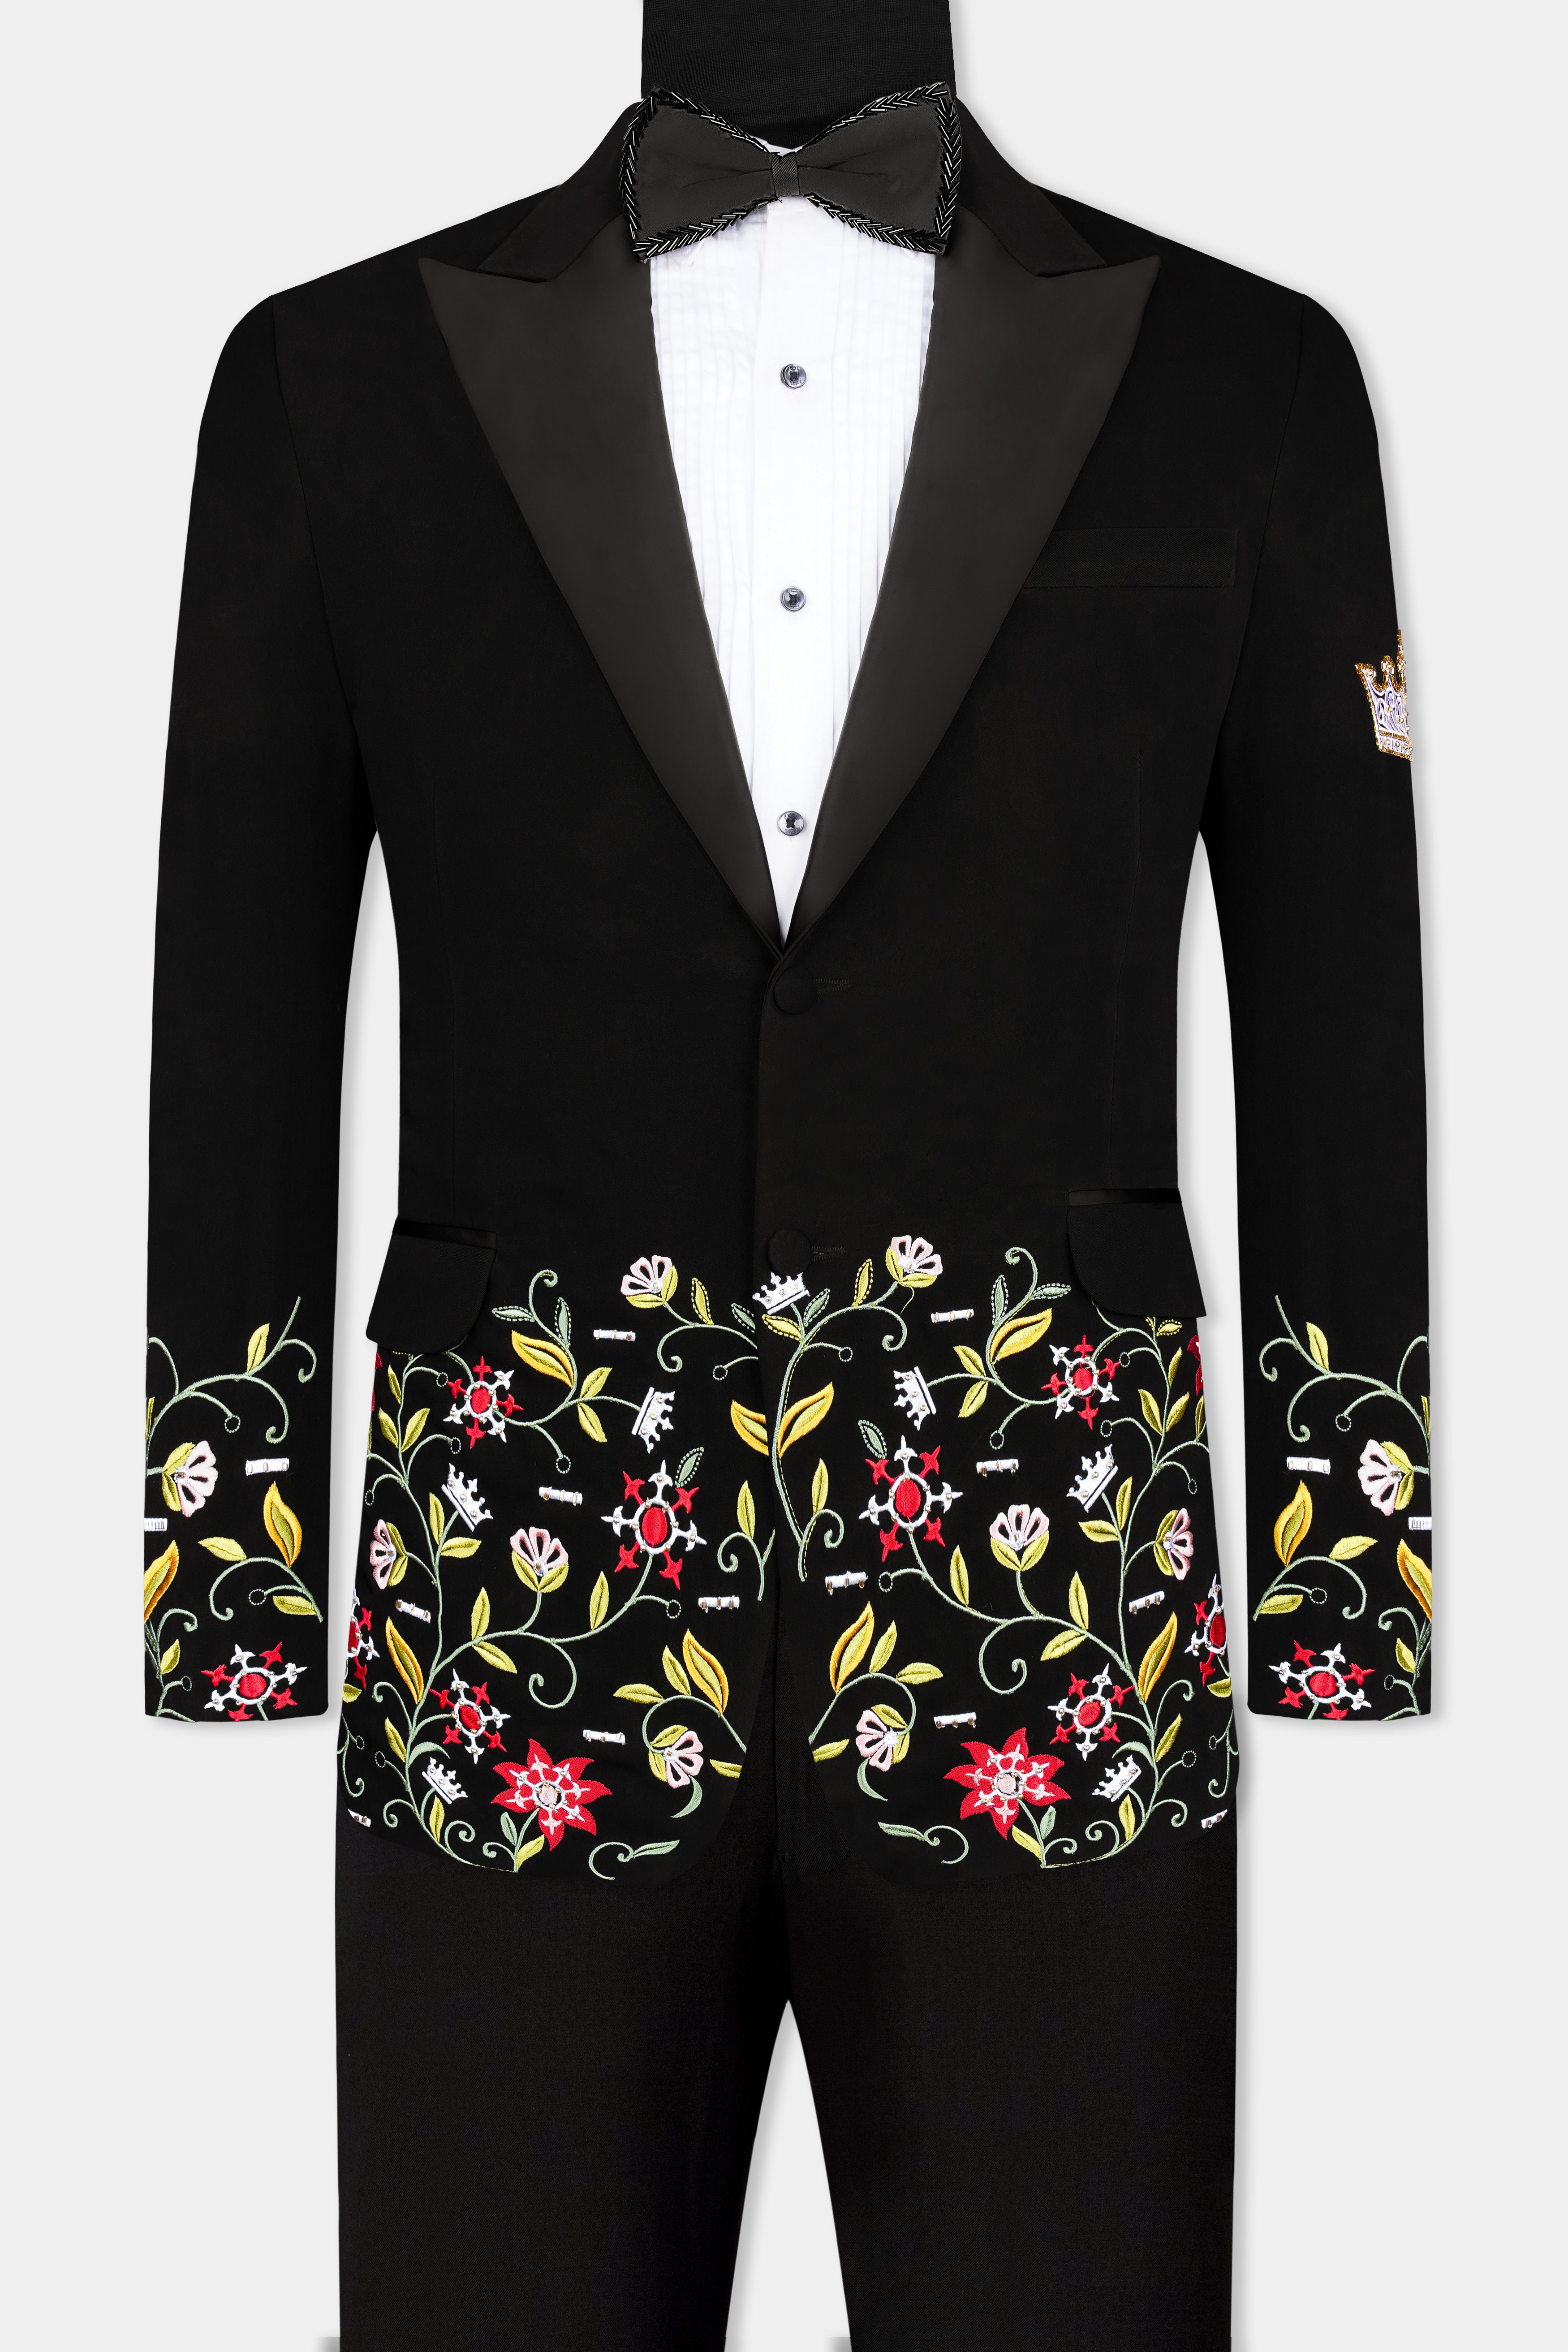 Korean Black (The Best Black We Have) Floral Embroidered Wool Rich Designer Tuxedo Suit